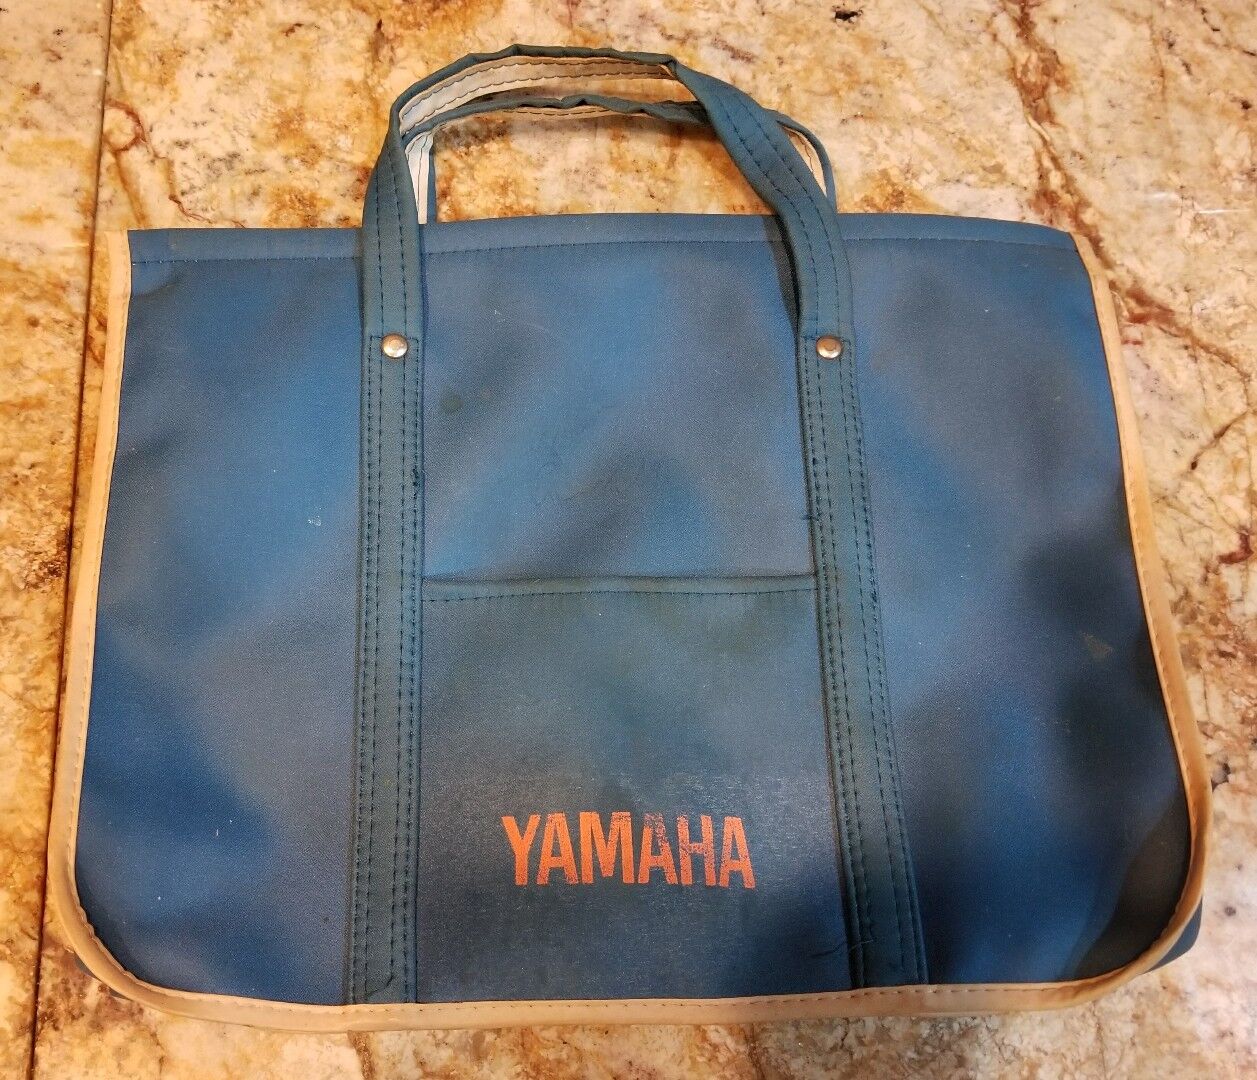 Yamaha VINTAGE blue laptop travel bag 1970's 1980's case 